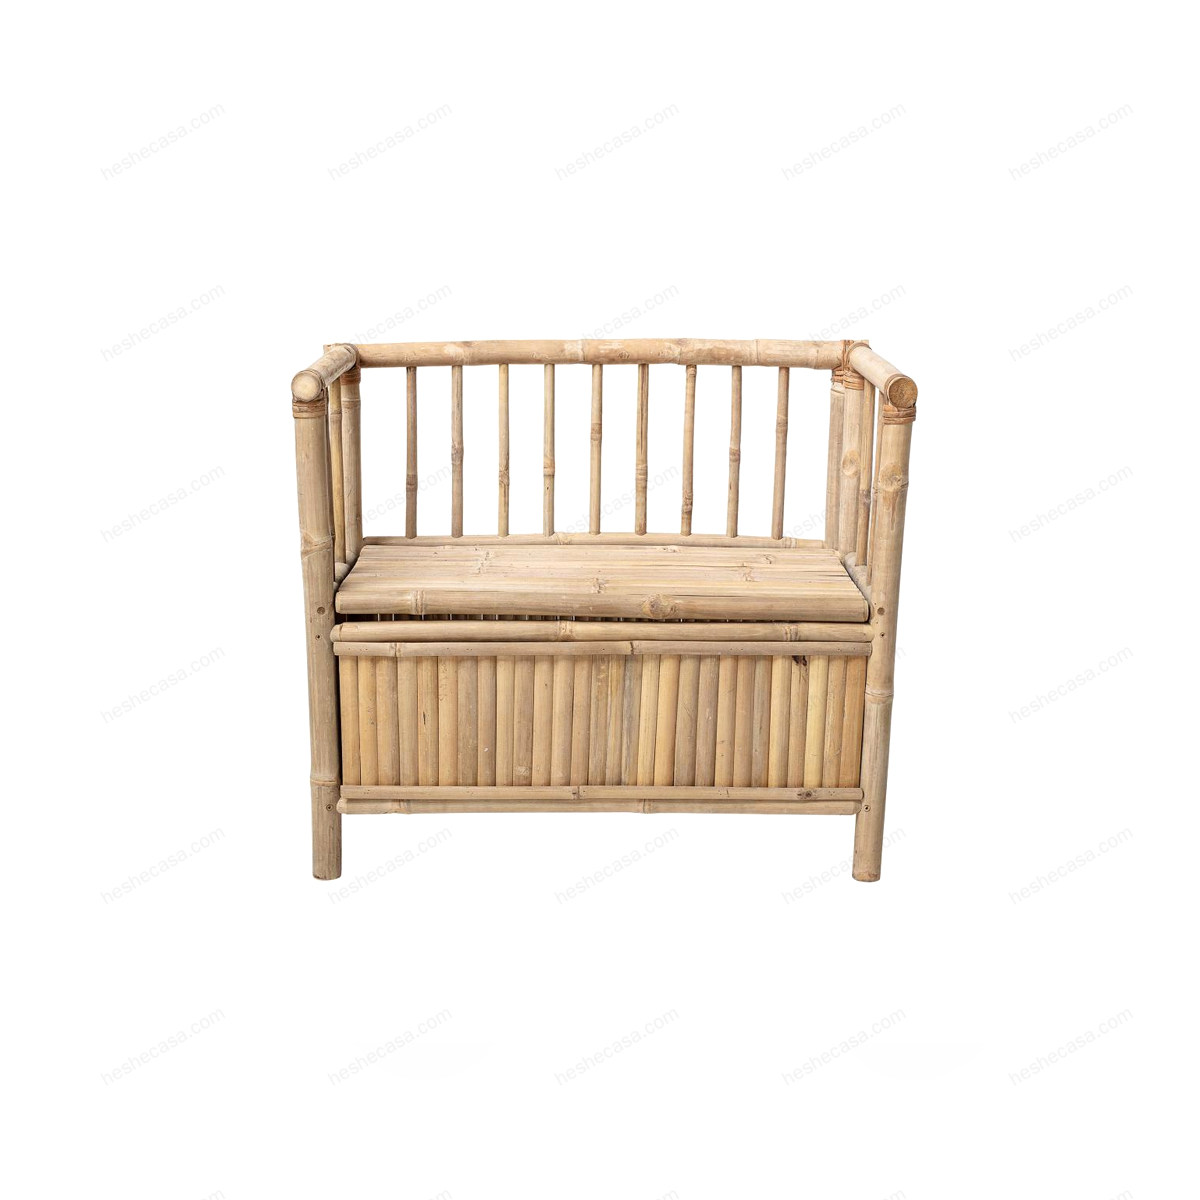 Samin Bench, Nature, Bamboo长凳/长椅